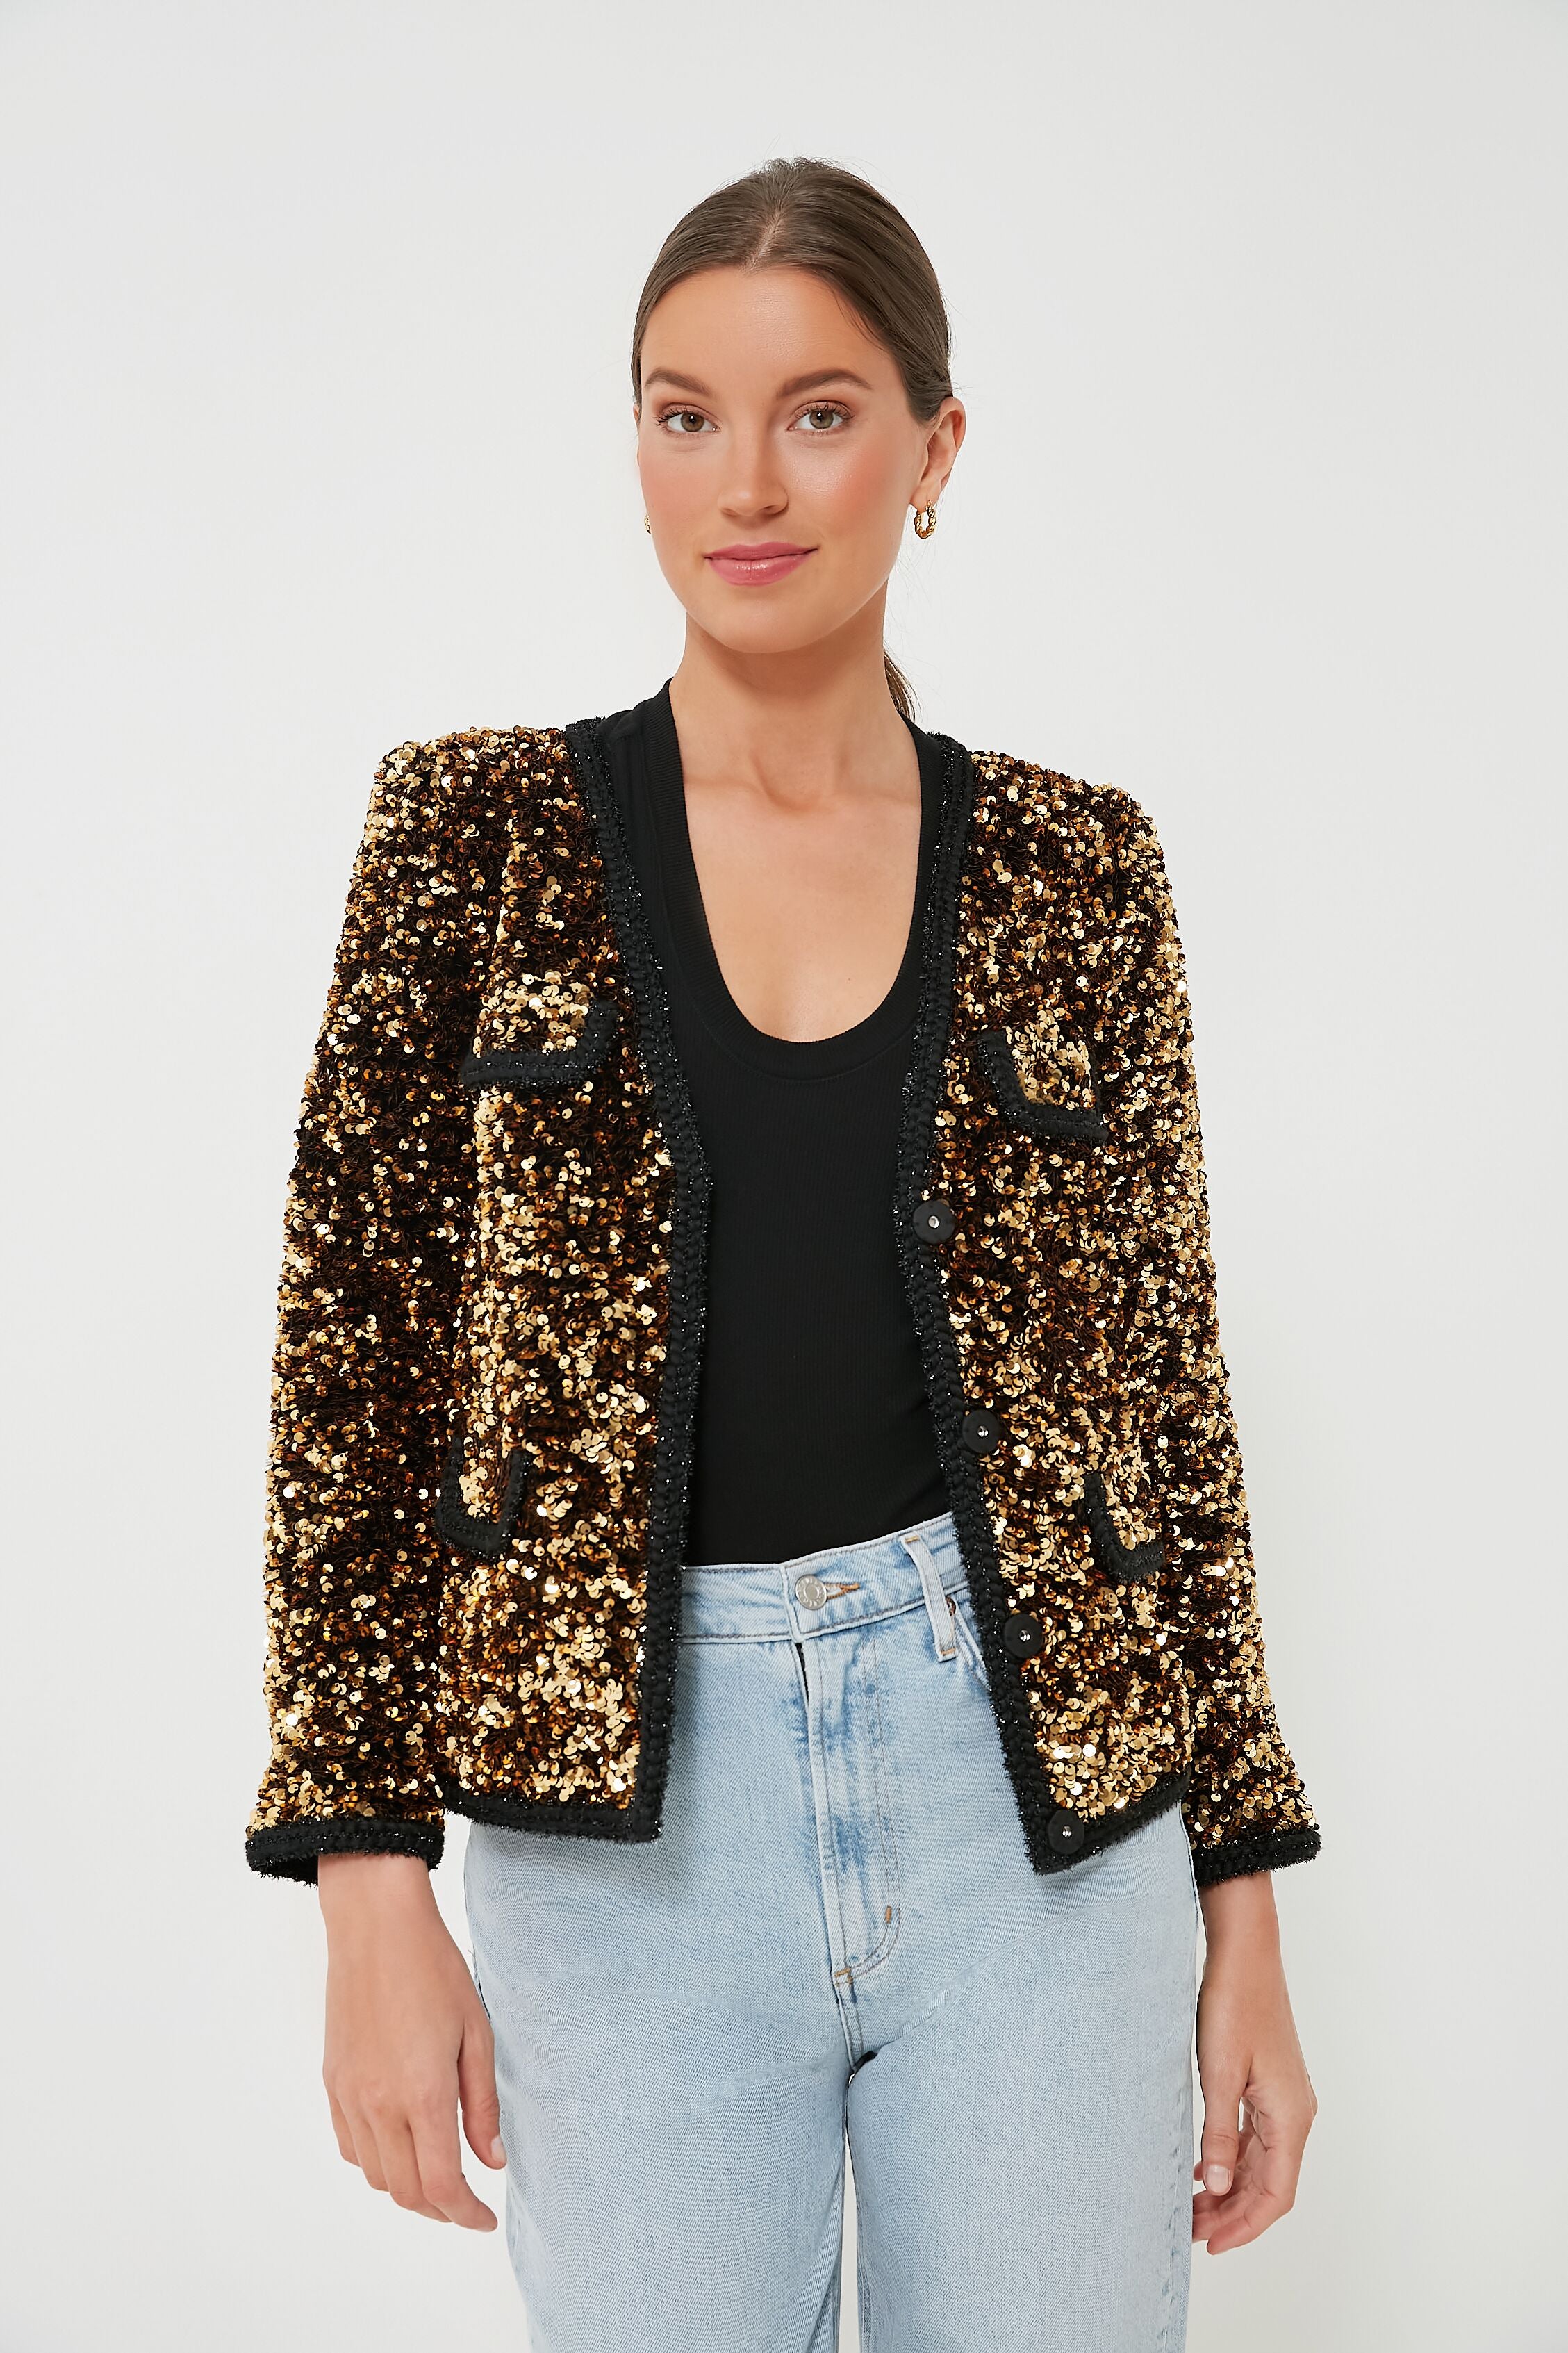 Womens Sequin Jacket Long Sleeve Glitter Bolero Shrug Open Front Blazer Coat (Gold,S) at Amazon Women's Clothing store